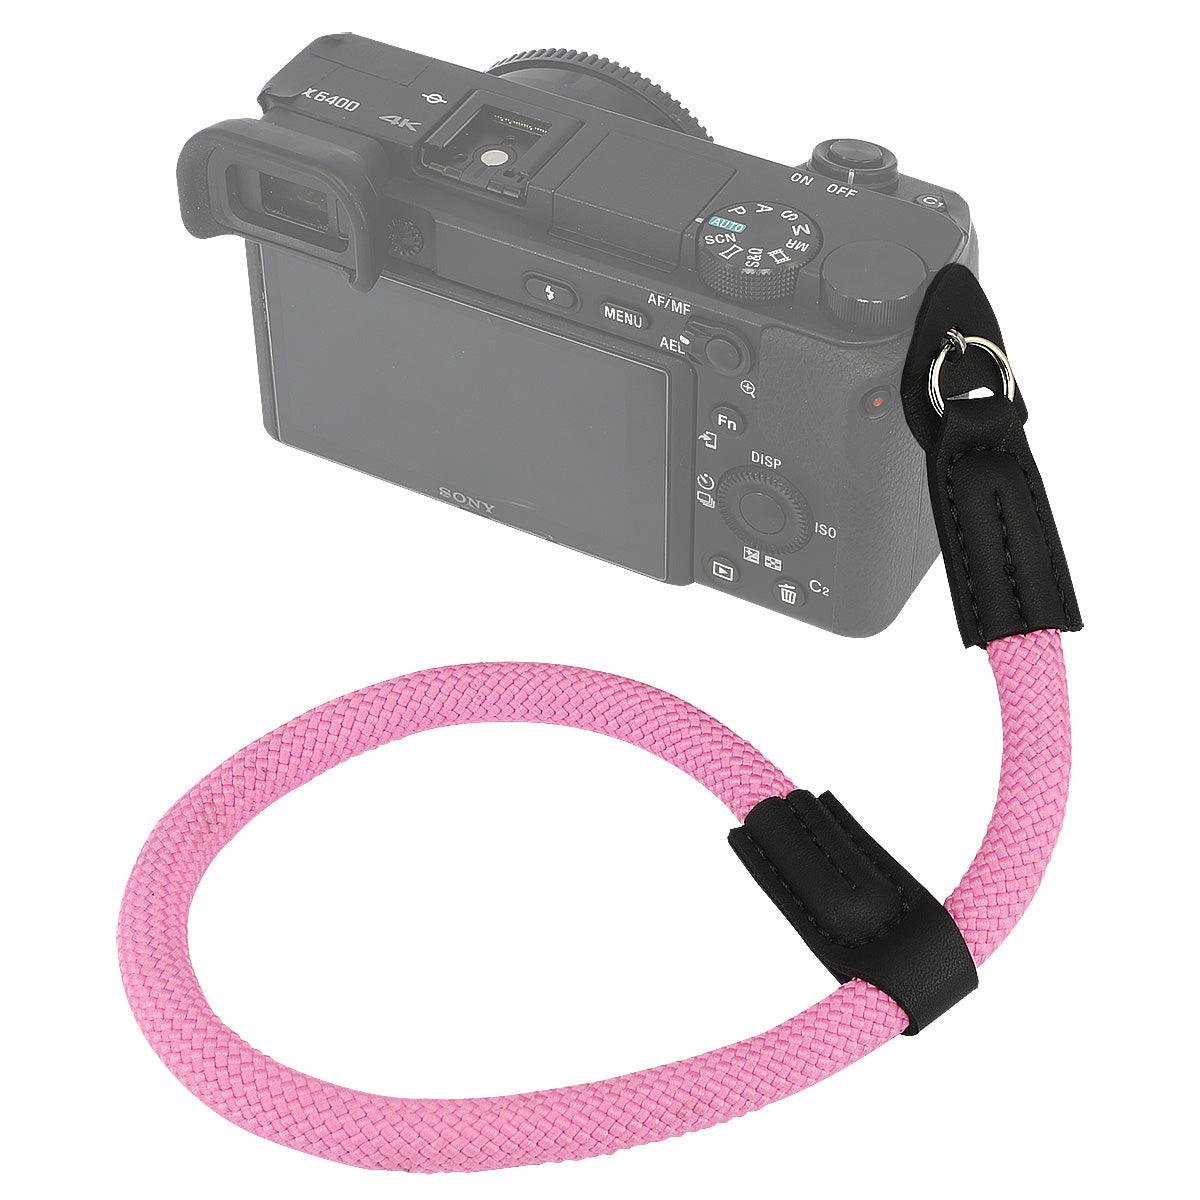 Haoge Camera Hand Wrist Strap for Panasonic S1 S1H S1R G7 G9 G85 G90 G95 GX7 GX8 GX85 GX9 GX850 GF7 GF8 GF10 GM1 GM5 GH5 Climbing Rope Pink